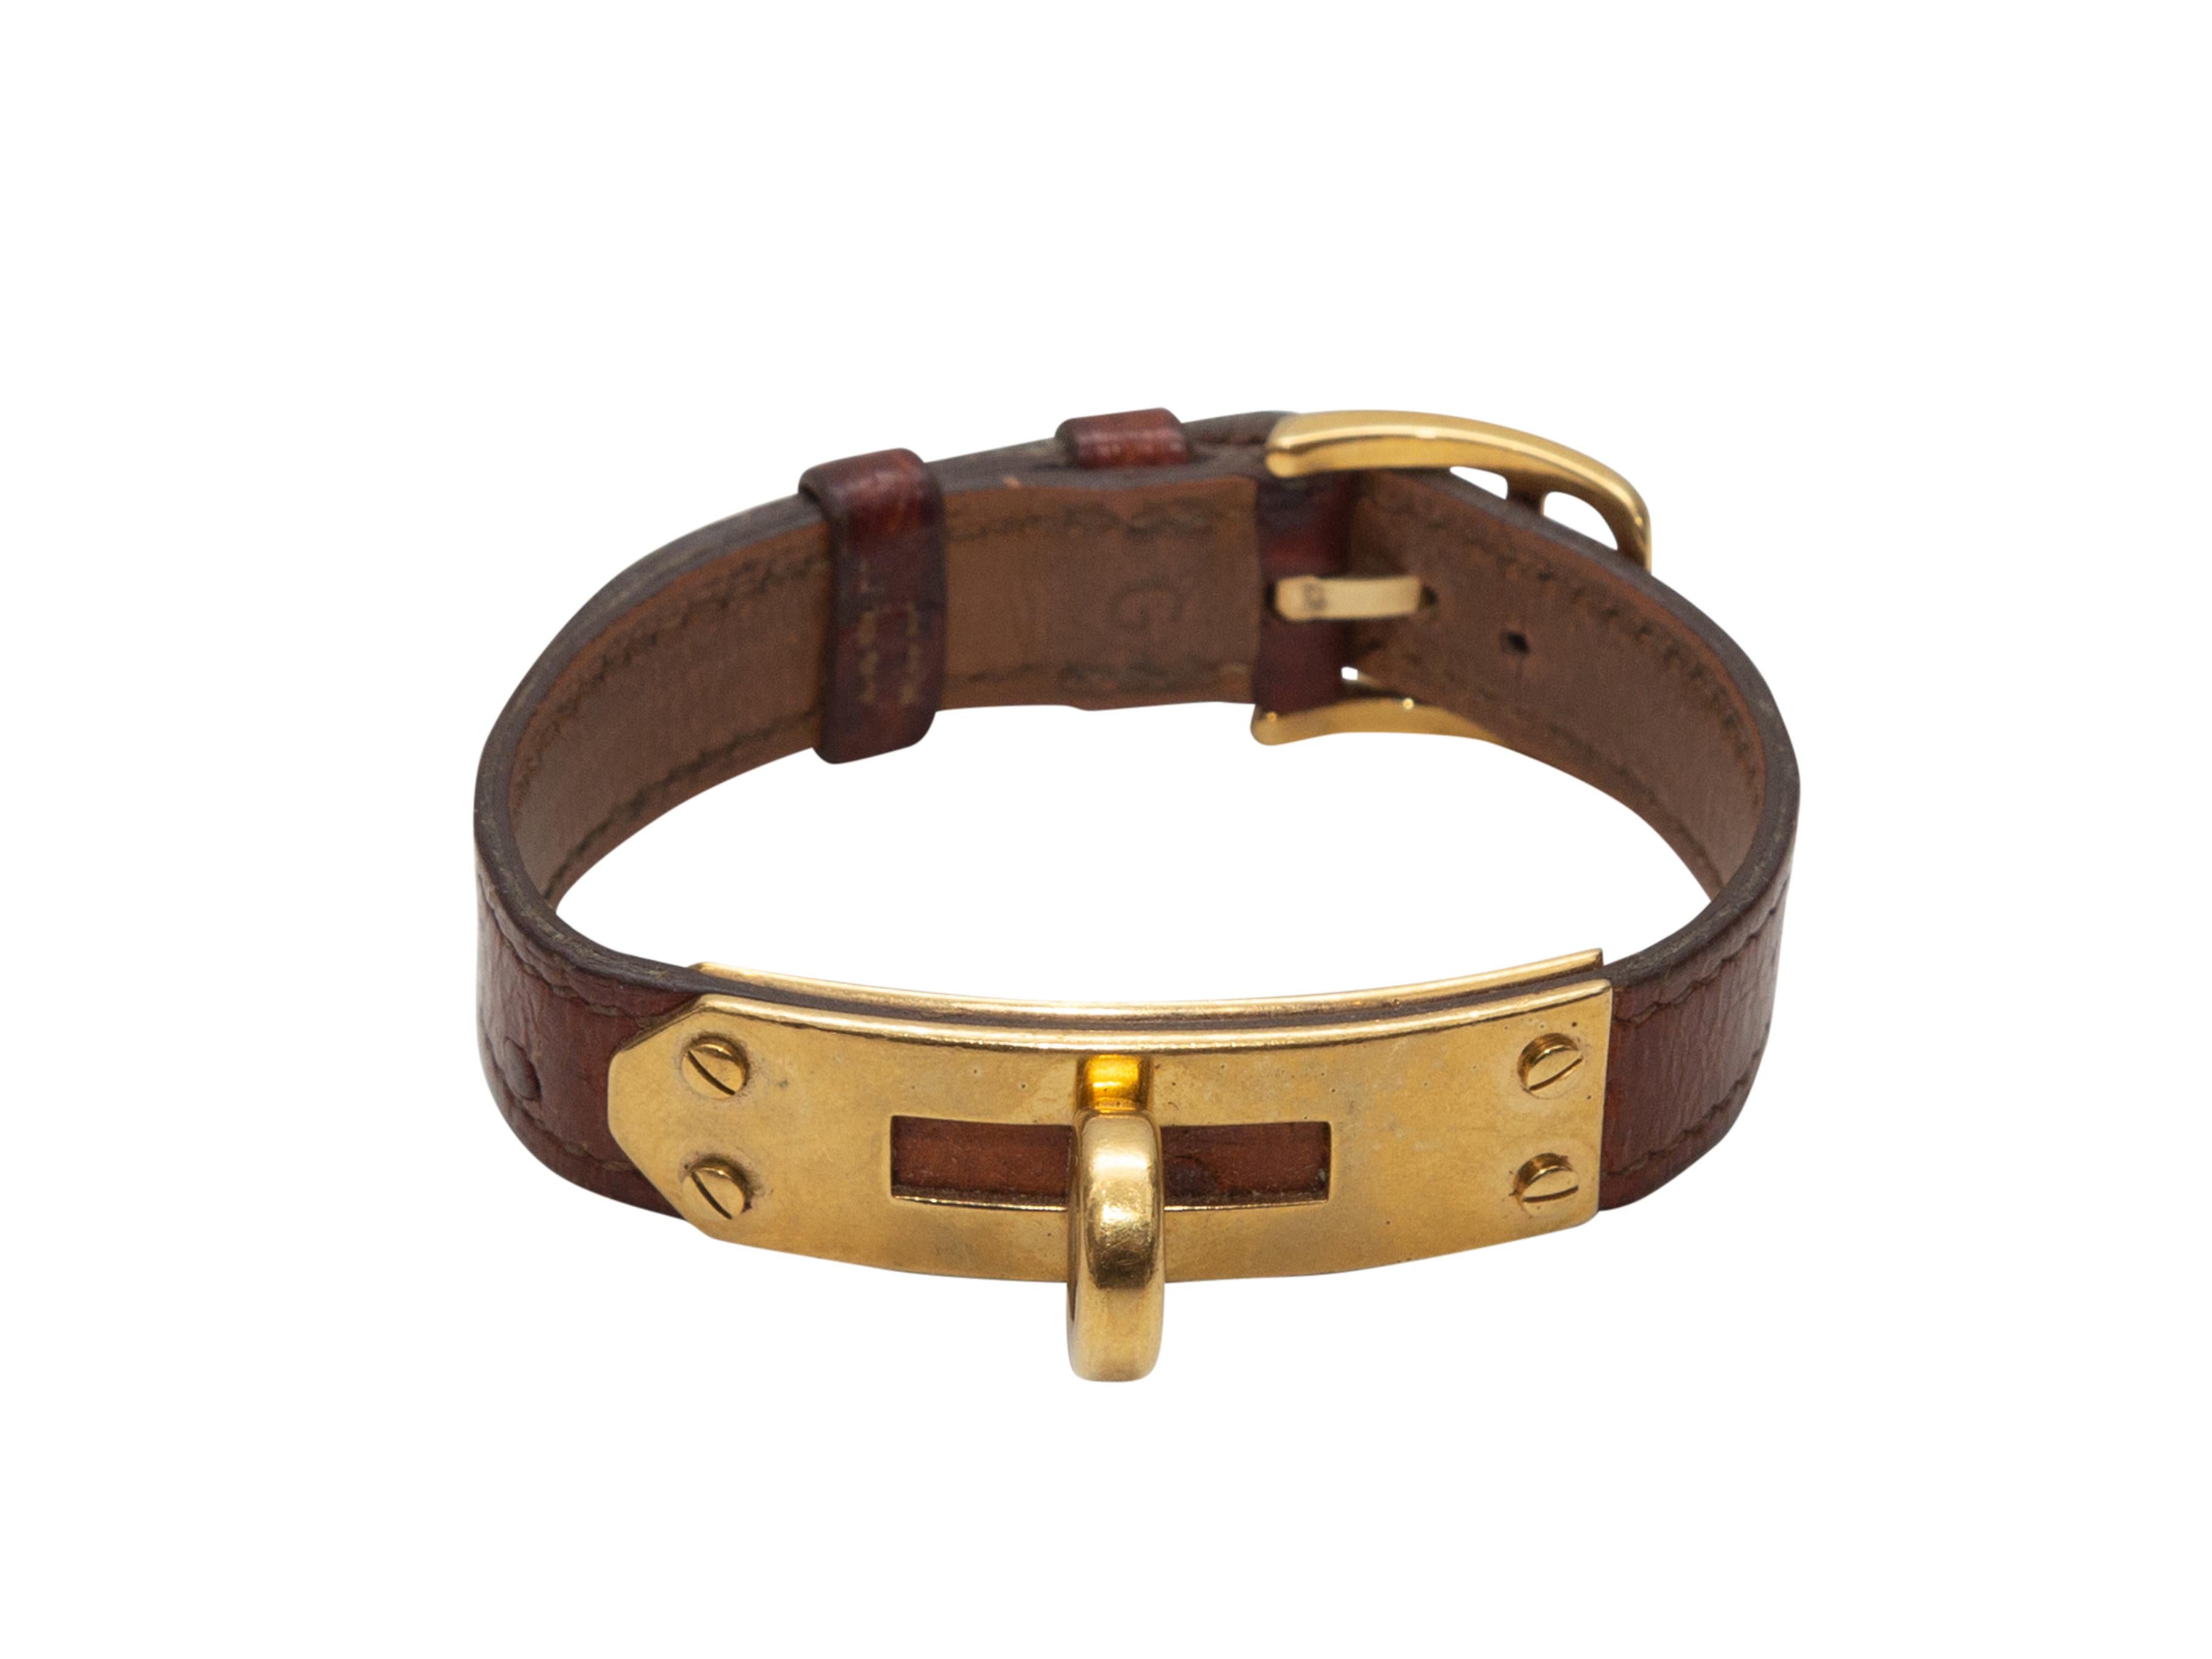 Product details: Vintage brown ostrich leather Kelley bracelet by Hermes. Circa 1987. Gold-tone closure. 0.5